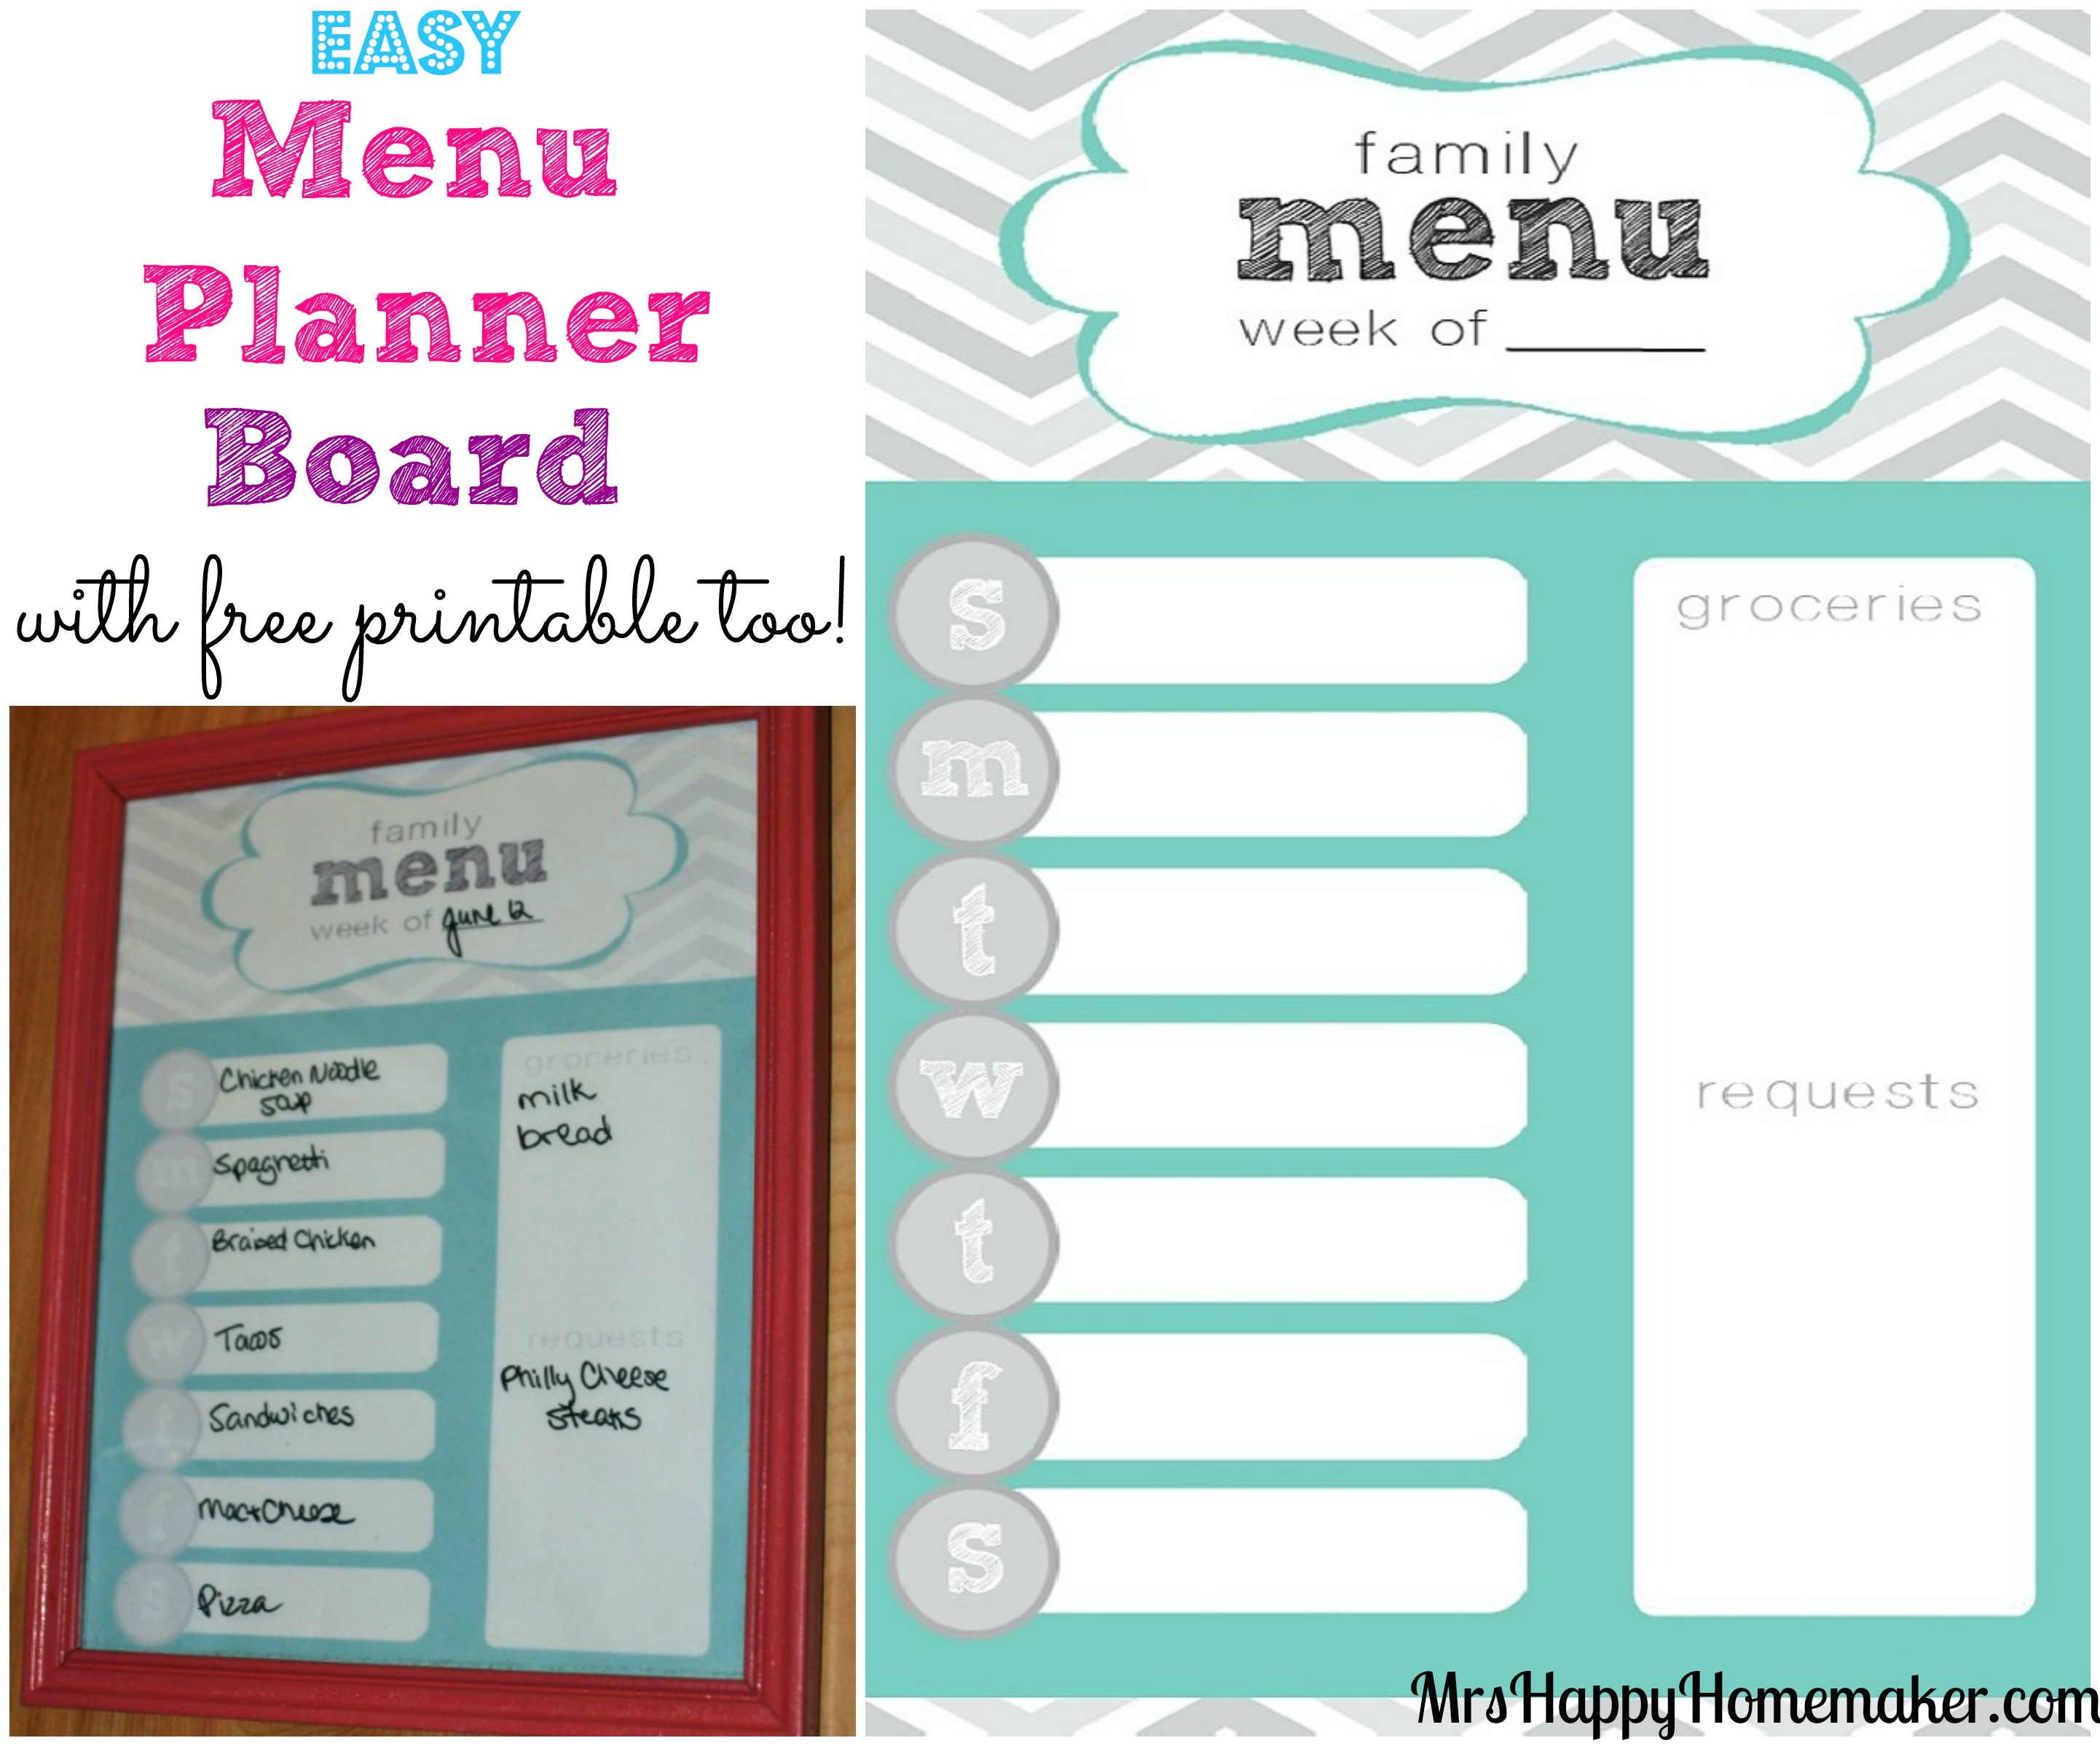 Easy Menu Planner Board - With A Free Printable! - Mrs Happy Homemaker - Free Printable Menu